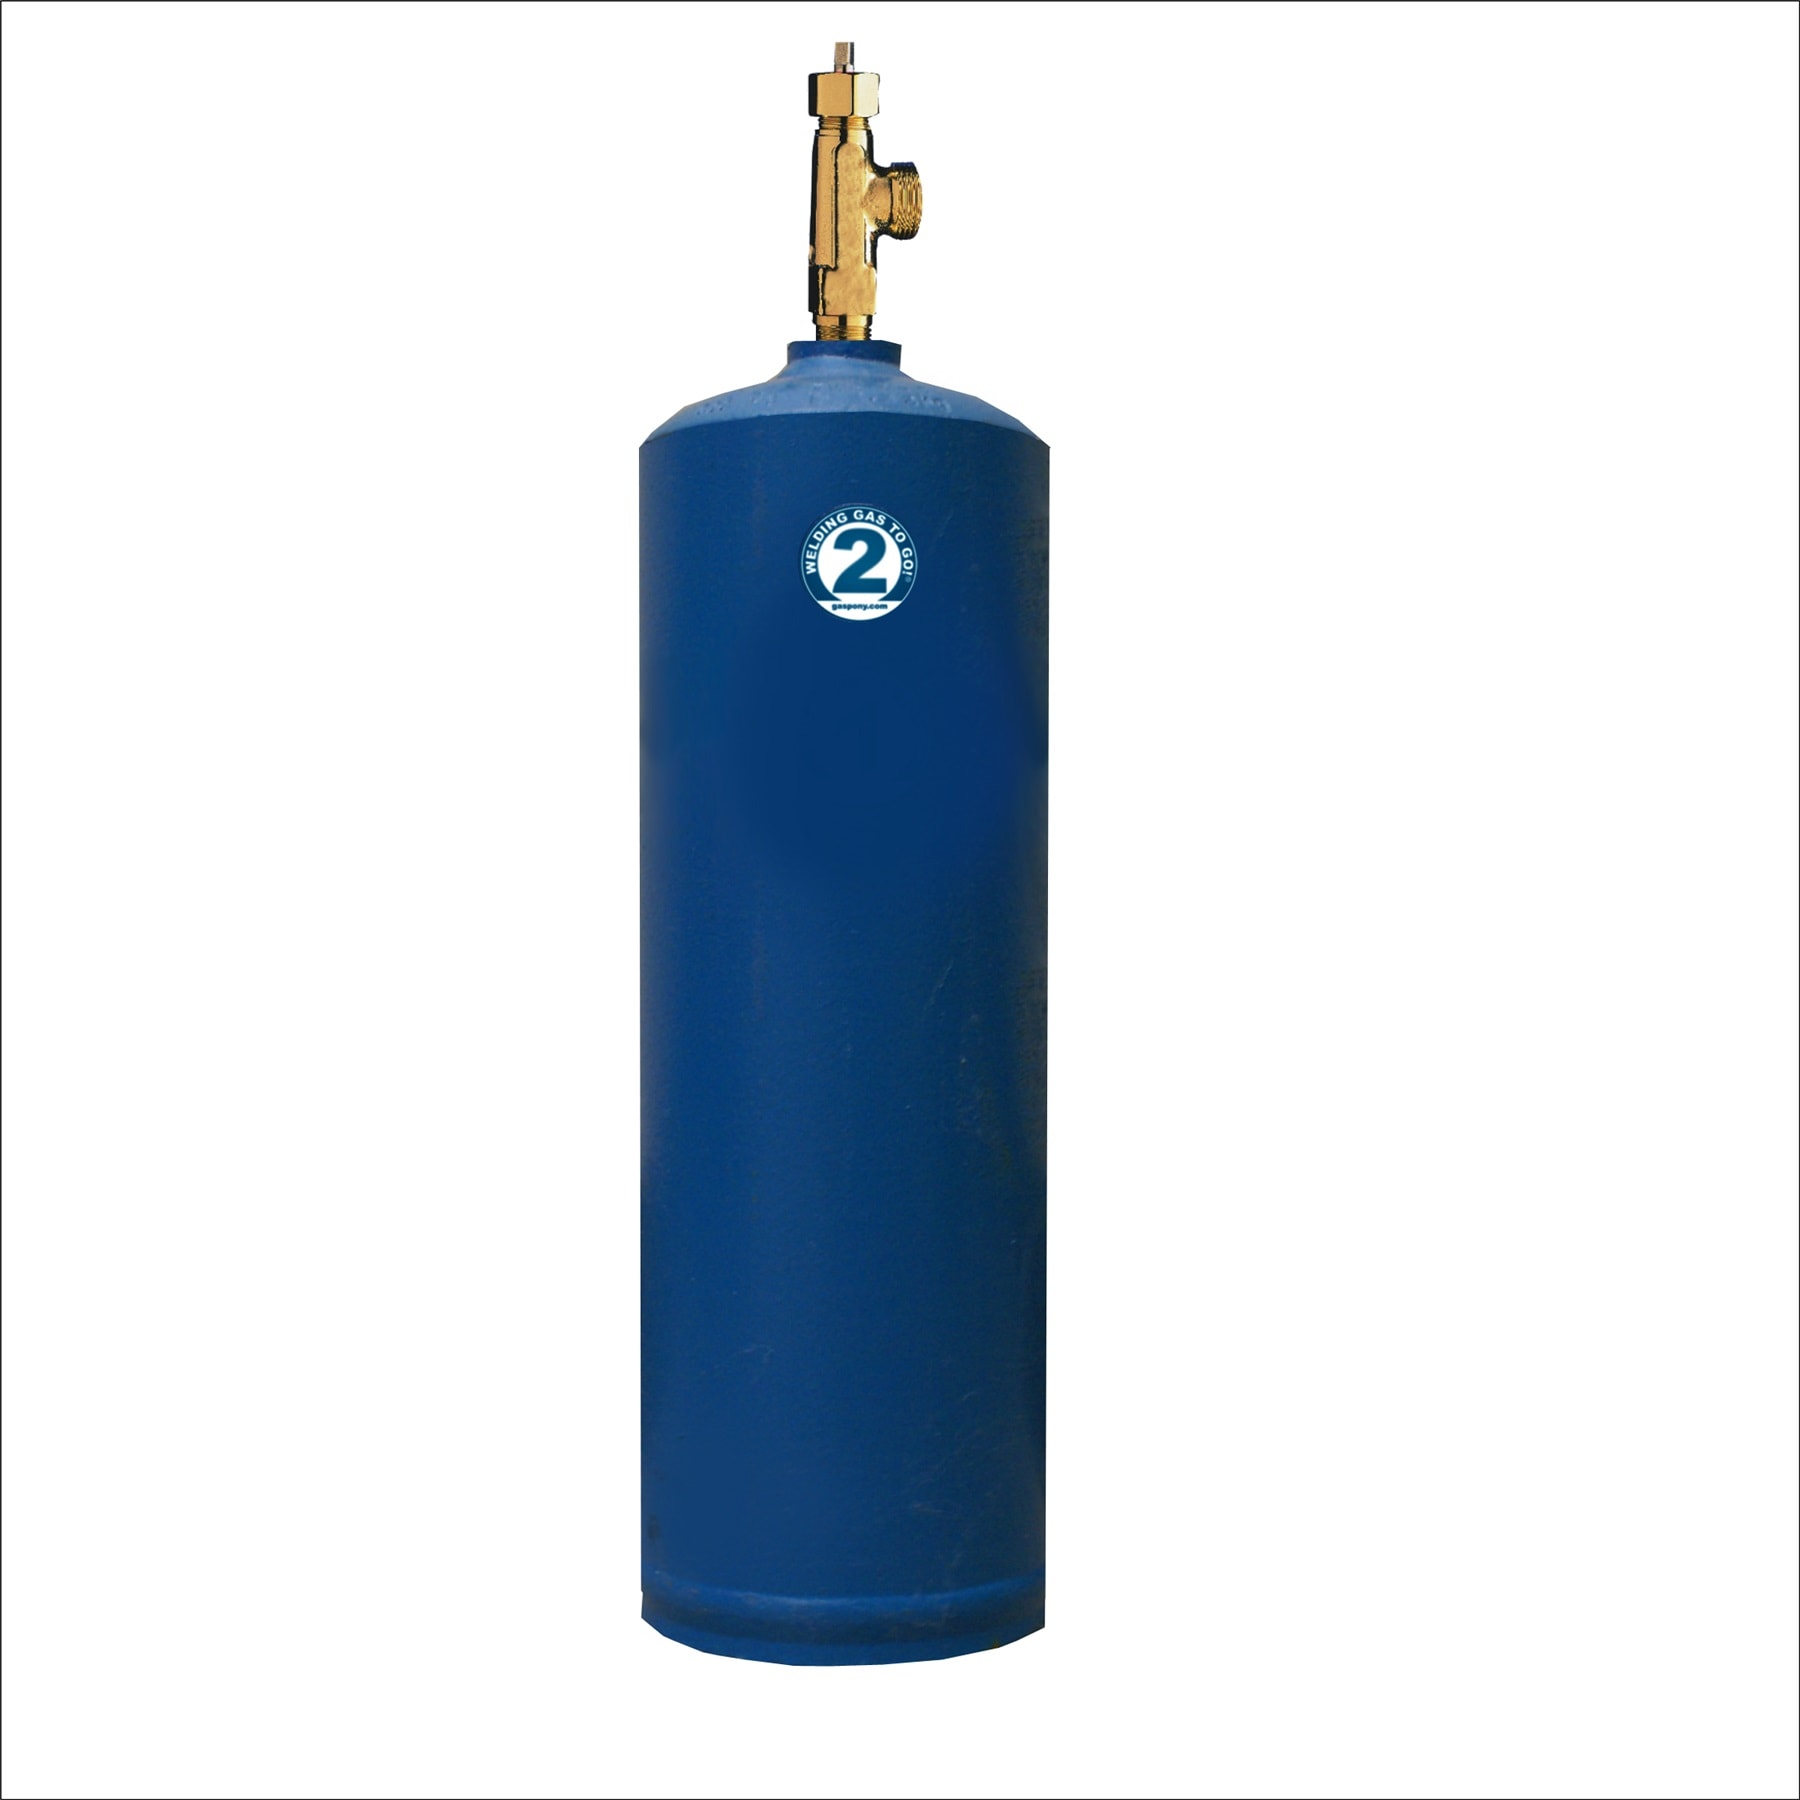 Gaspony 40 CF Acetylene Cylinder, Blue, 1 Hour Burn Time